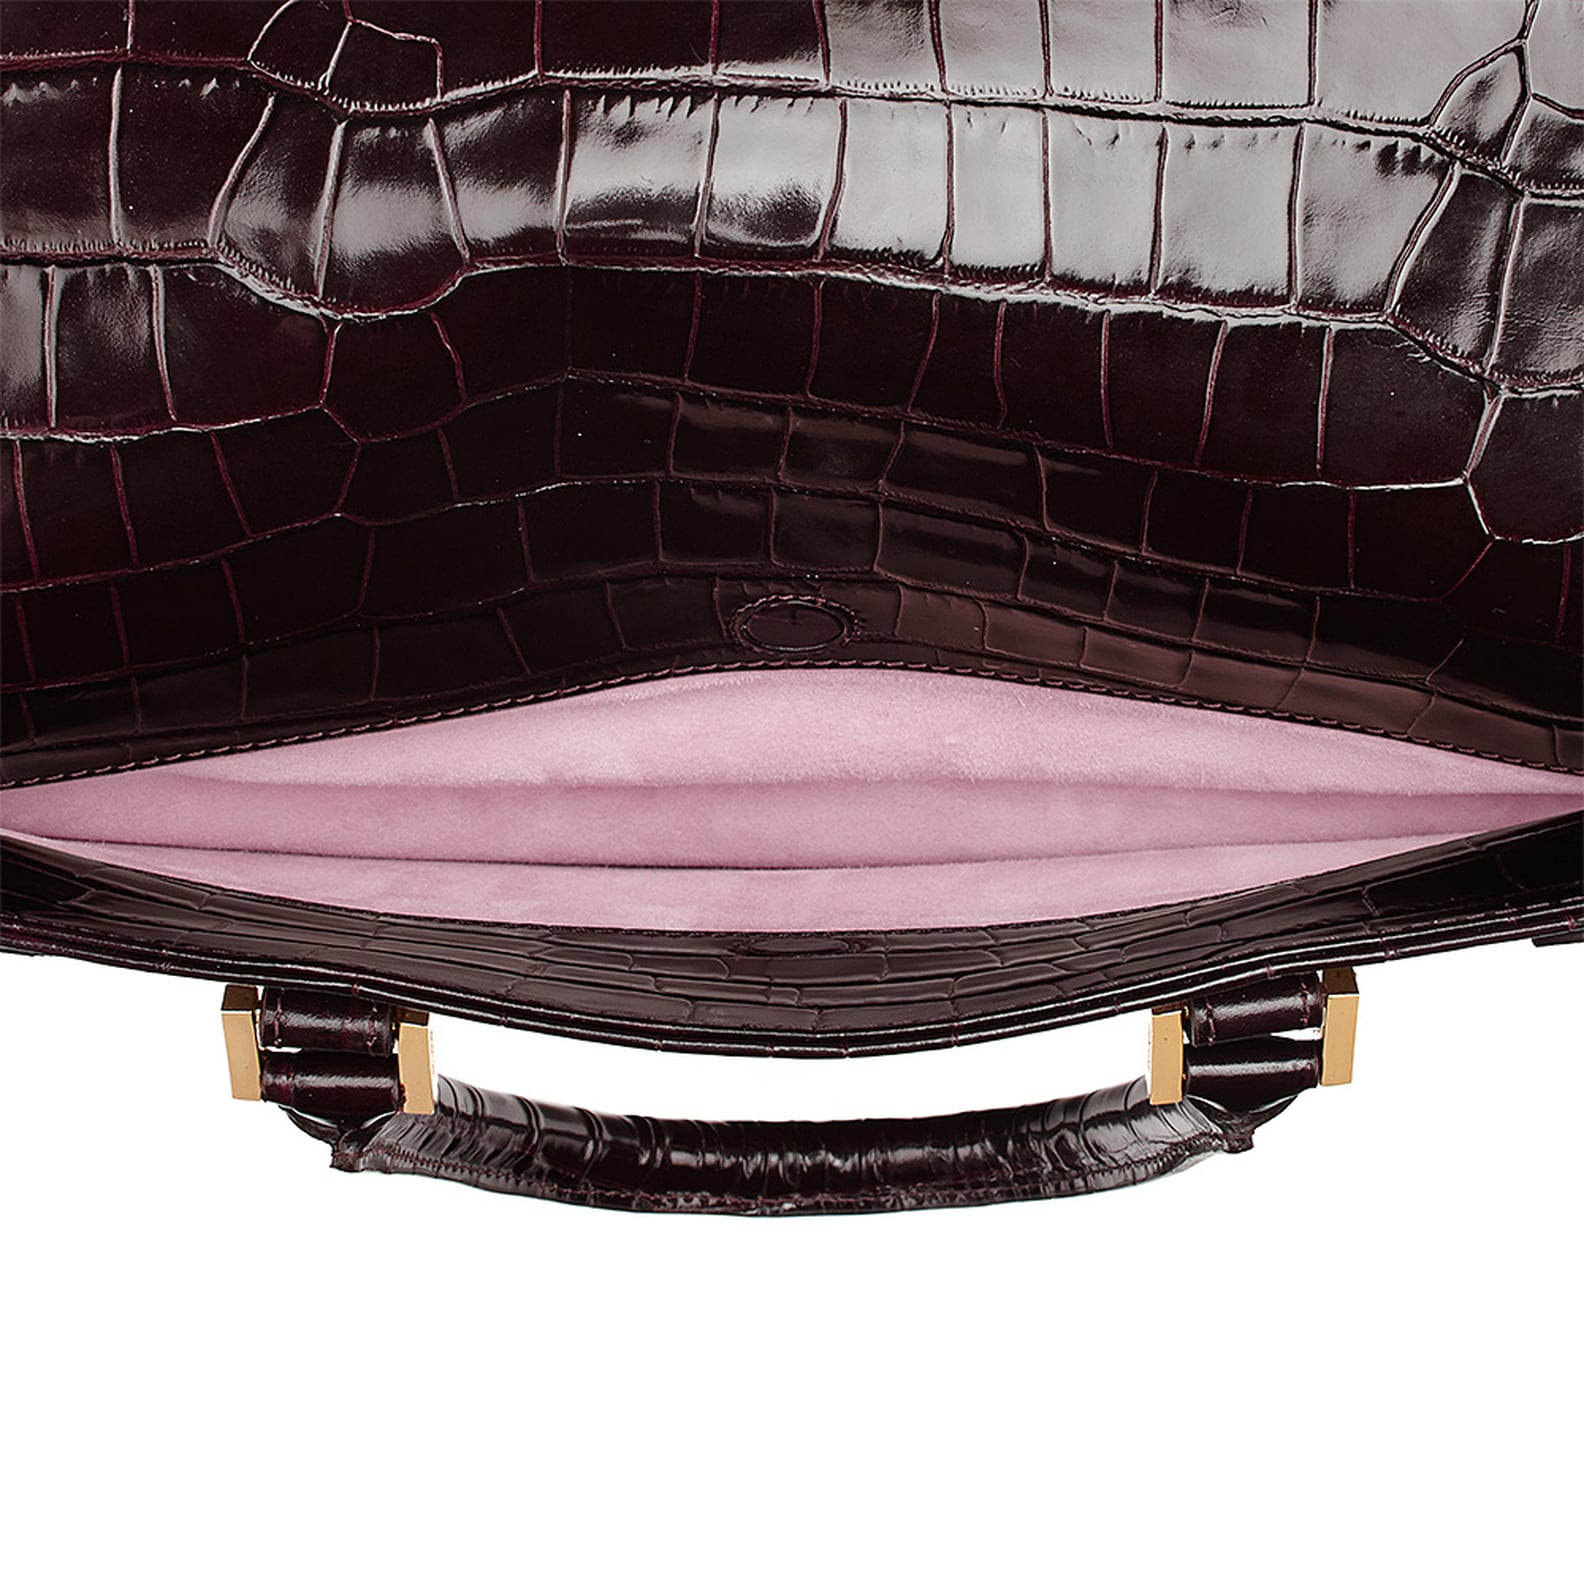 Olivia Palermo's Aspinal of London Handbag | POPSUGAR Fashion